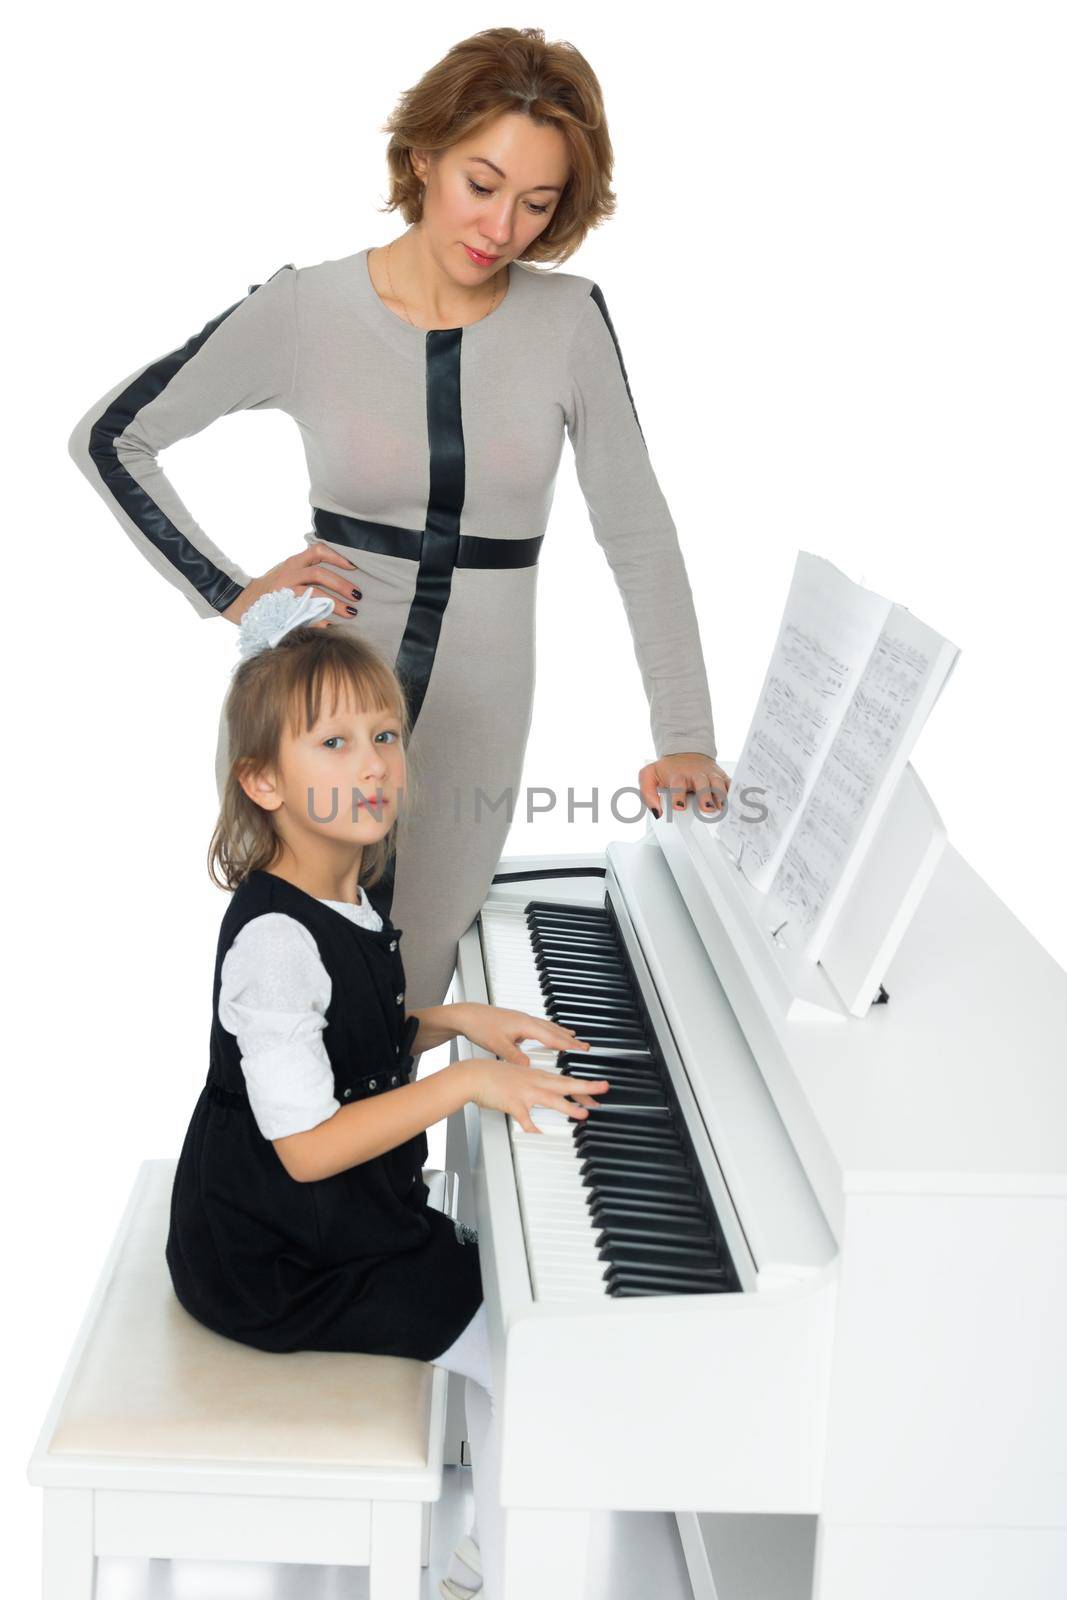 The girl plays the piano by kolesnikov_studio